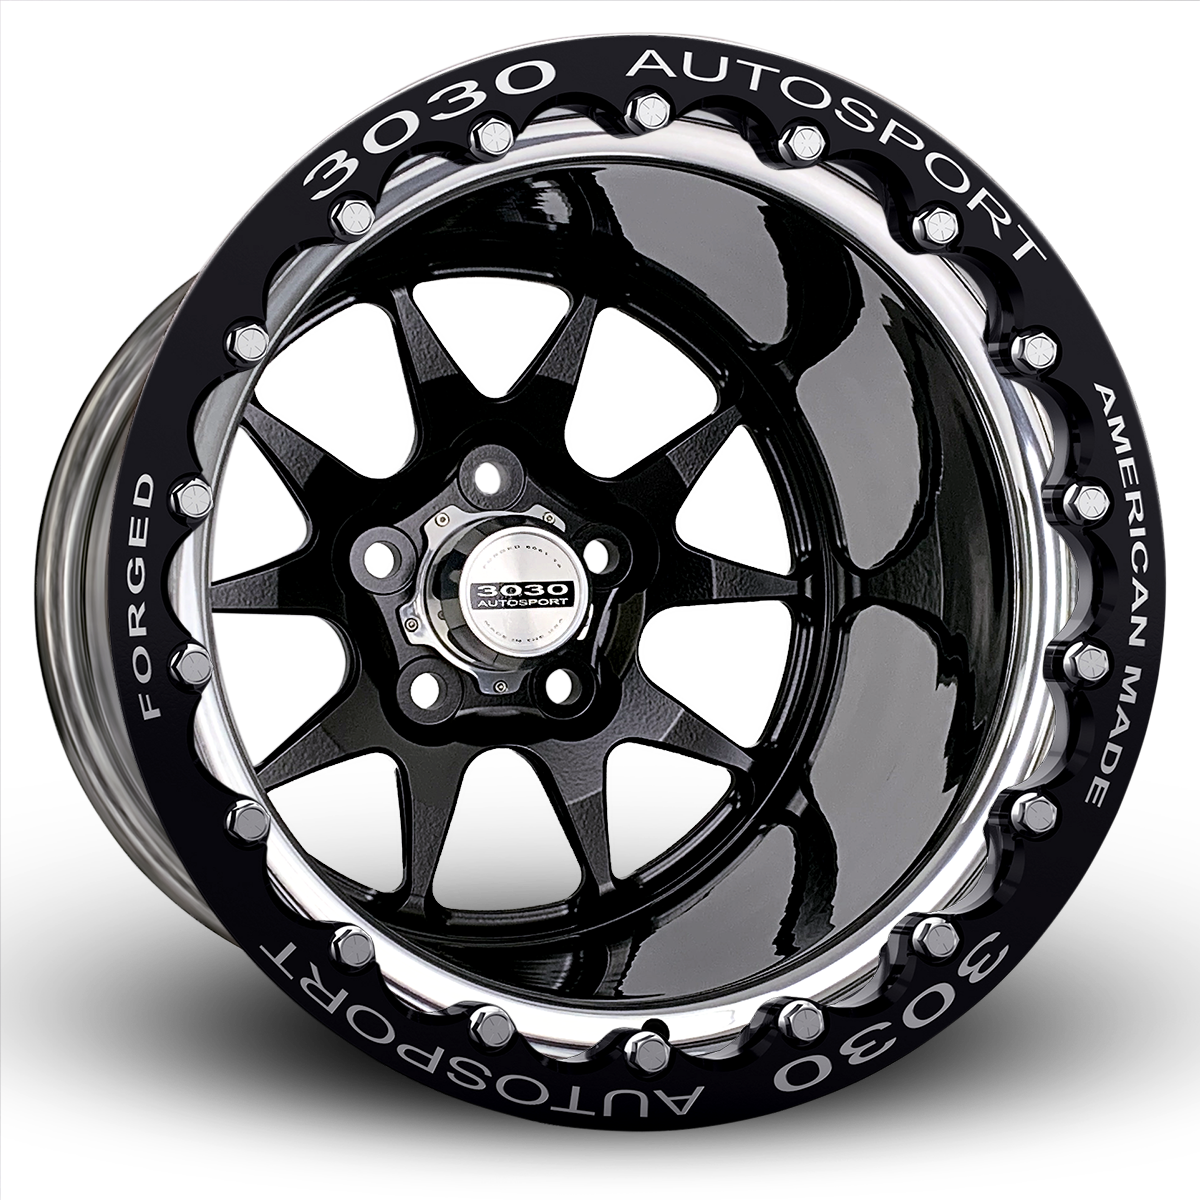 MACH-10 Double-Beadlock Wheel, Size: 15x12", Bolt Pattern: 5x4.75", Backspace: 3.500" [Black/Polished]